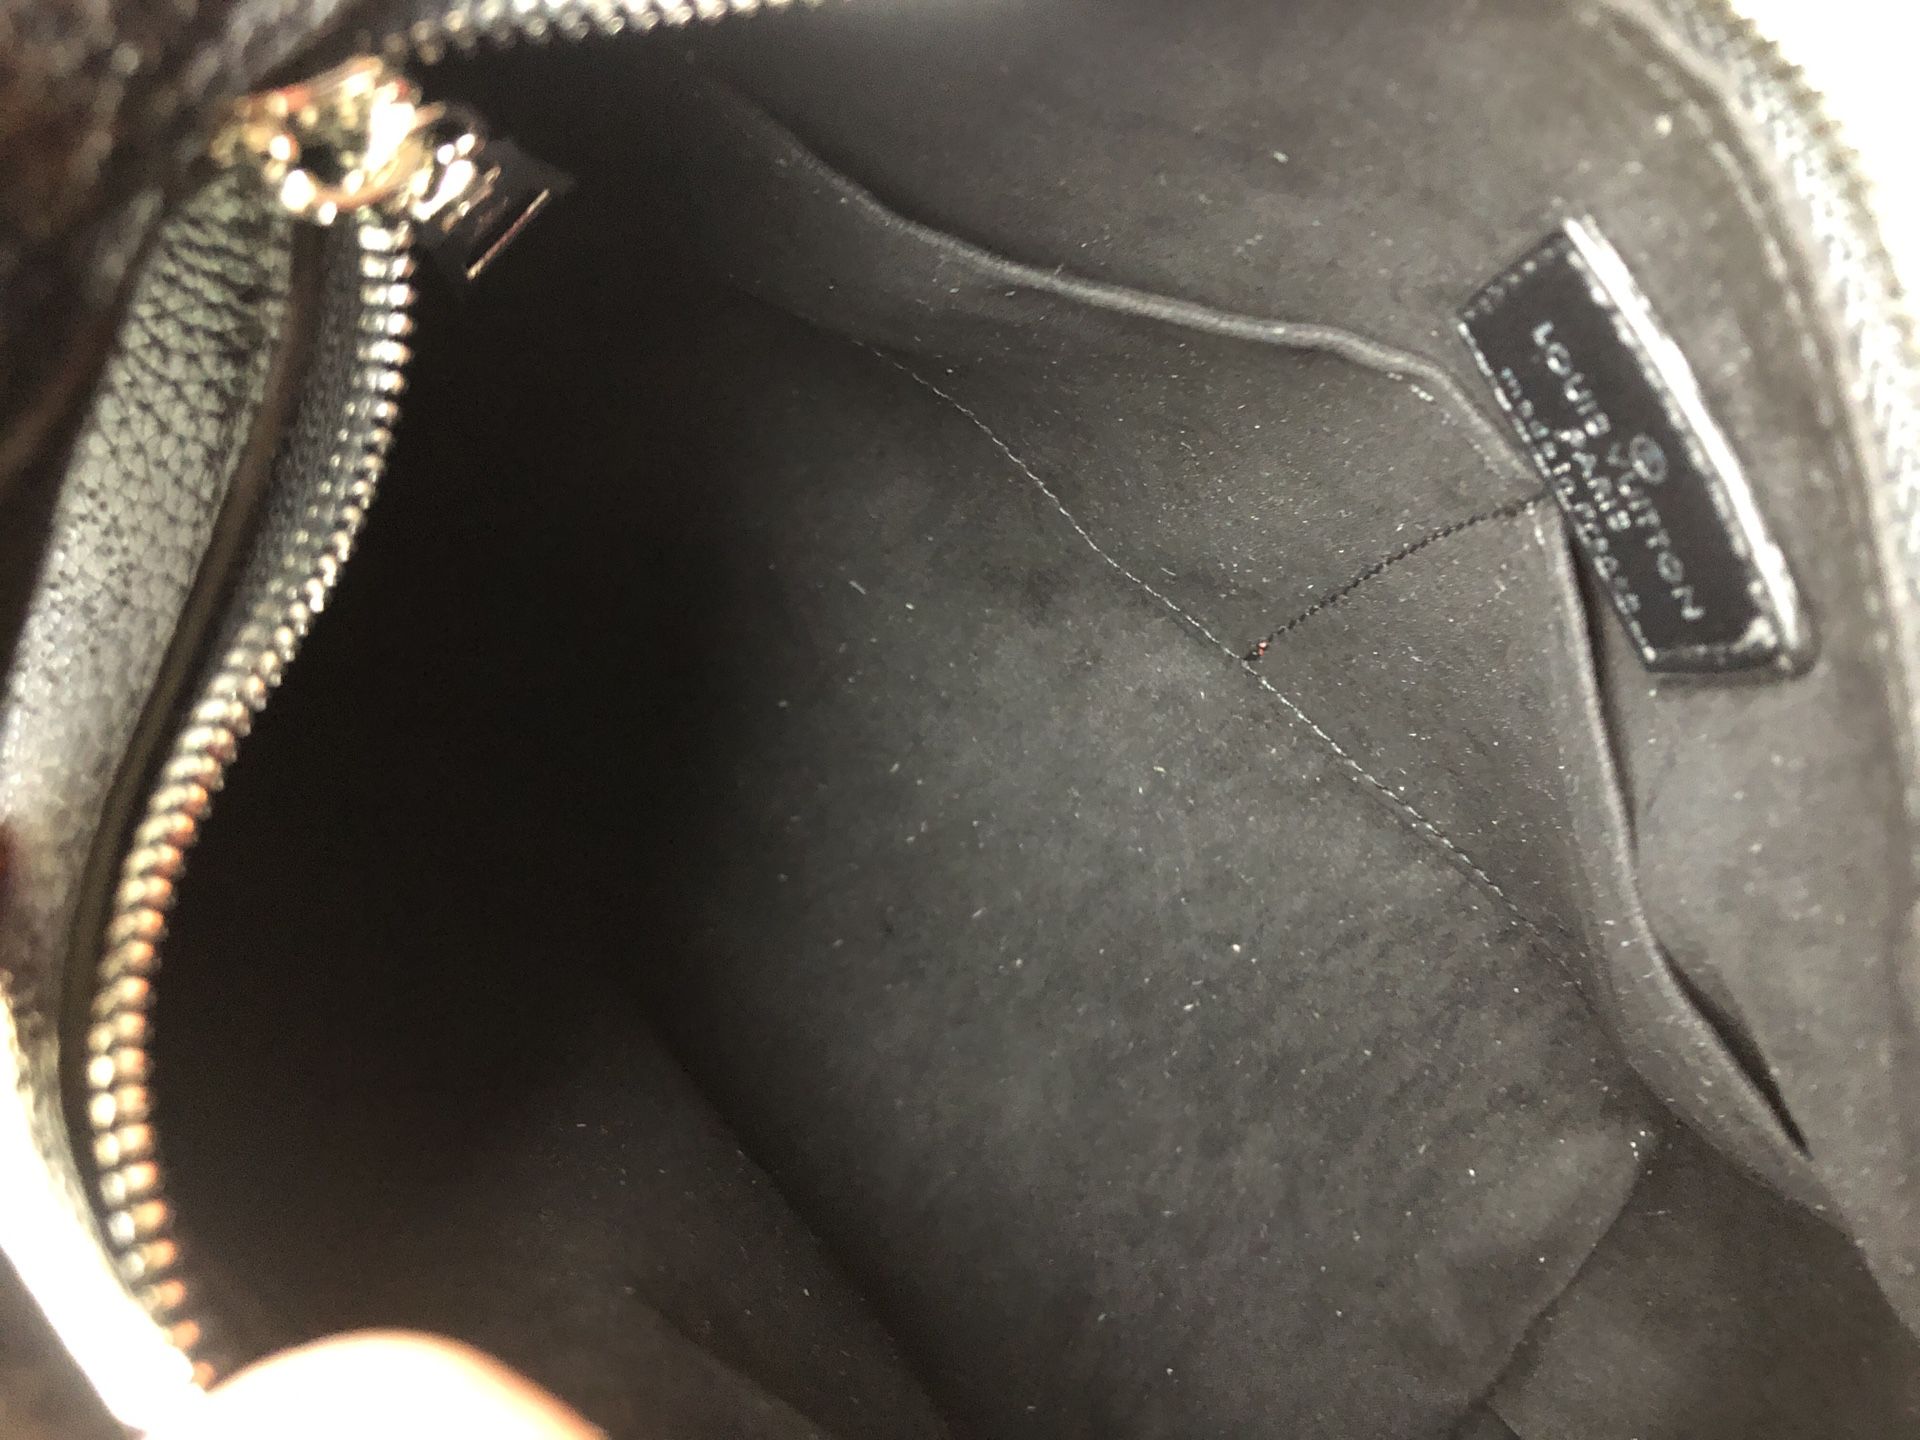 Louis Vuitton black leather chain tote bag